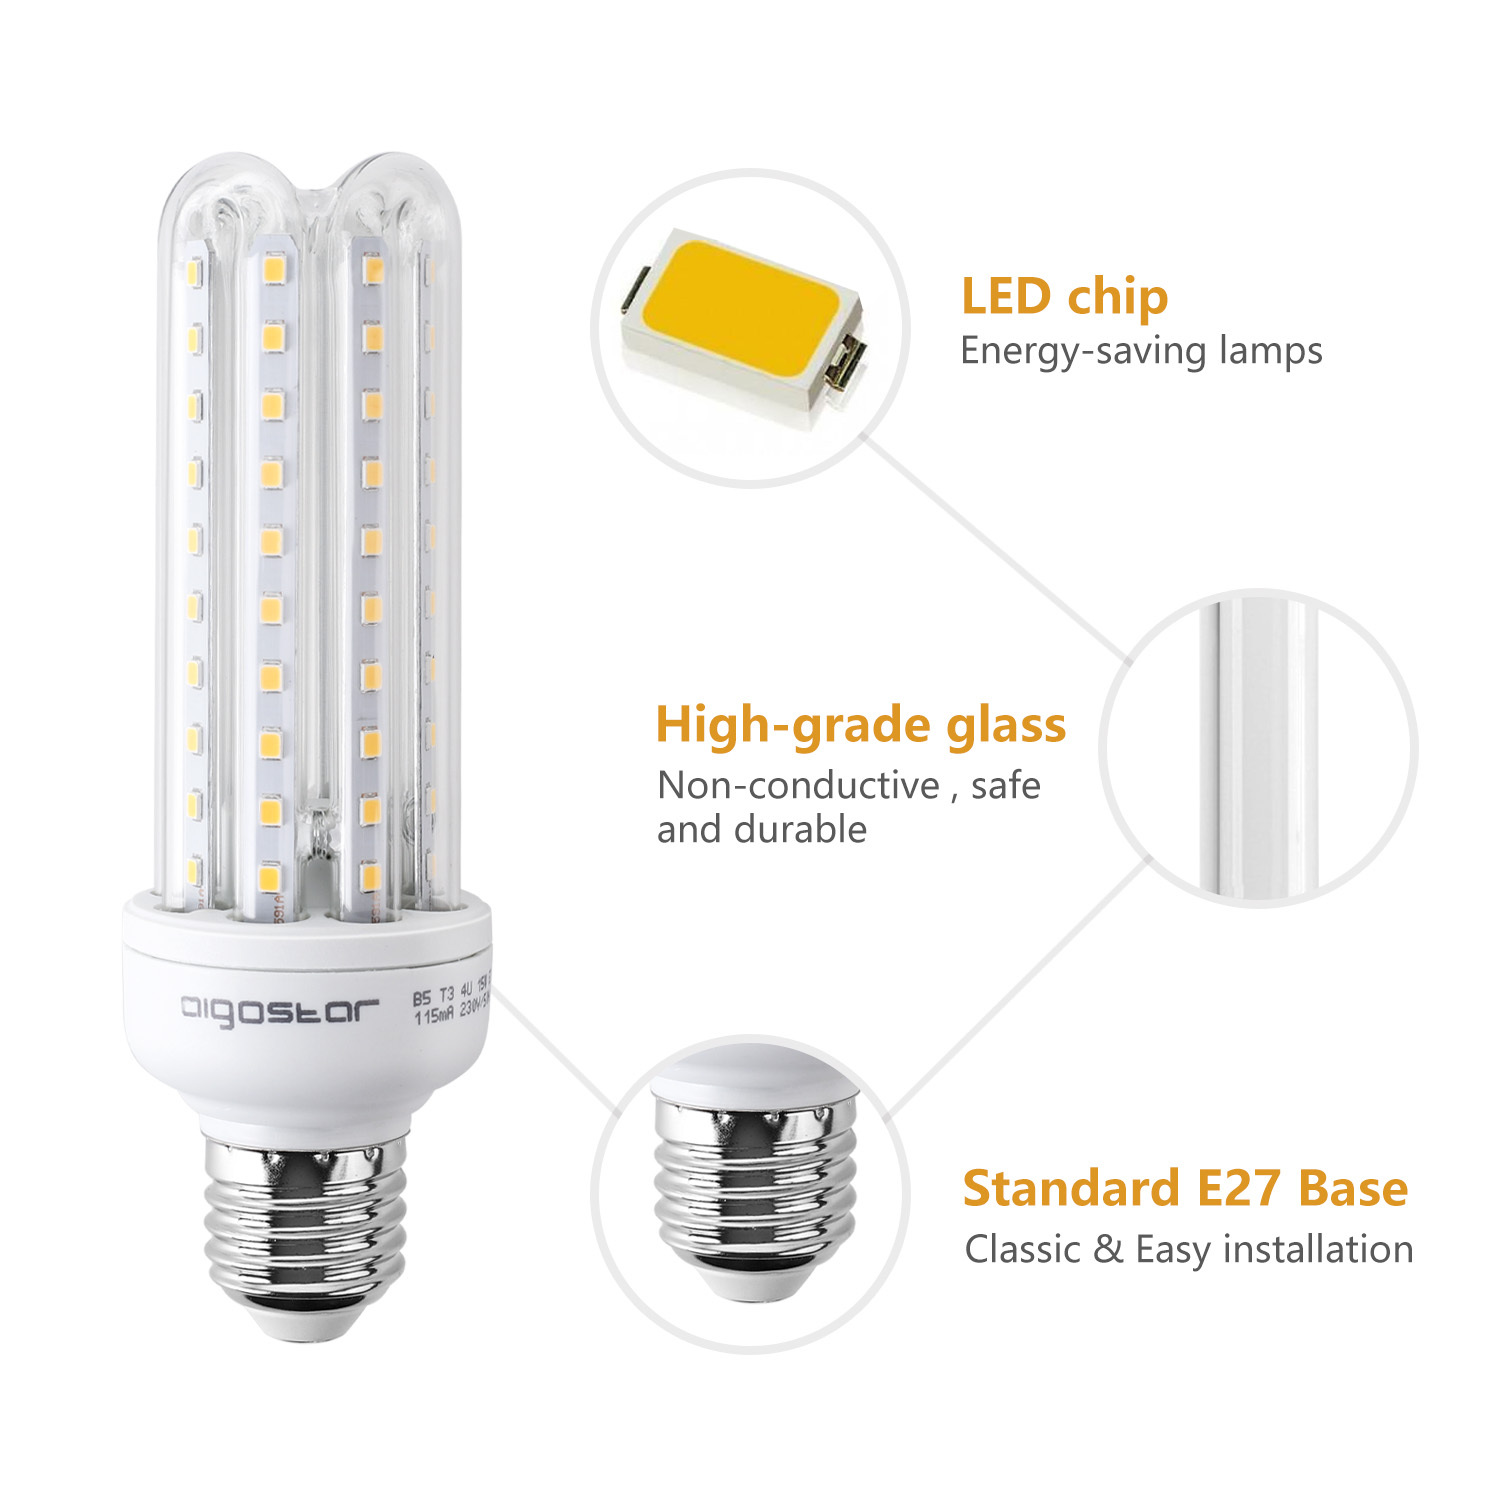 Aigostar - LED Leuchtmittel LED B5 T3 4U E27,  360° großer Abstrahlwinkel, 15W entspricht 83W Glühlampen, 1200 Lumen, warmes Licht 3000K, Multipack mit 5 Lampen.(10)